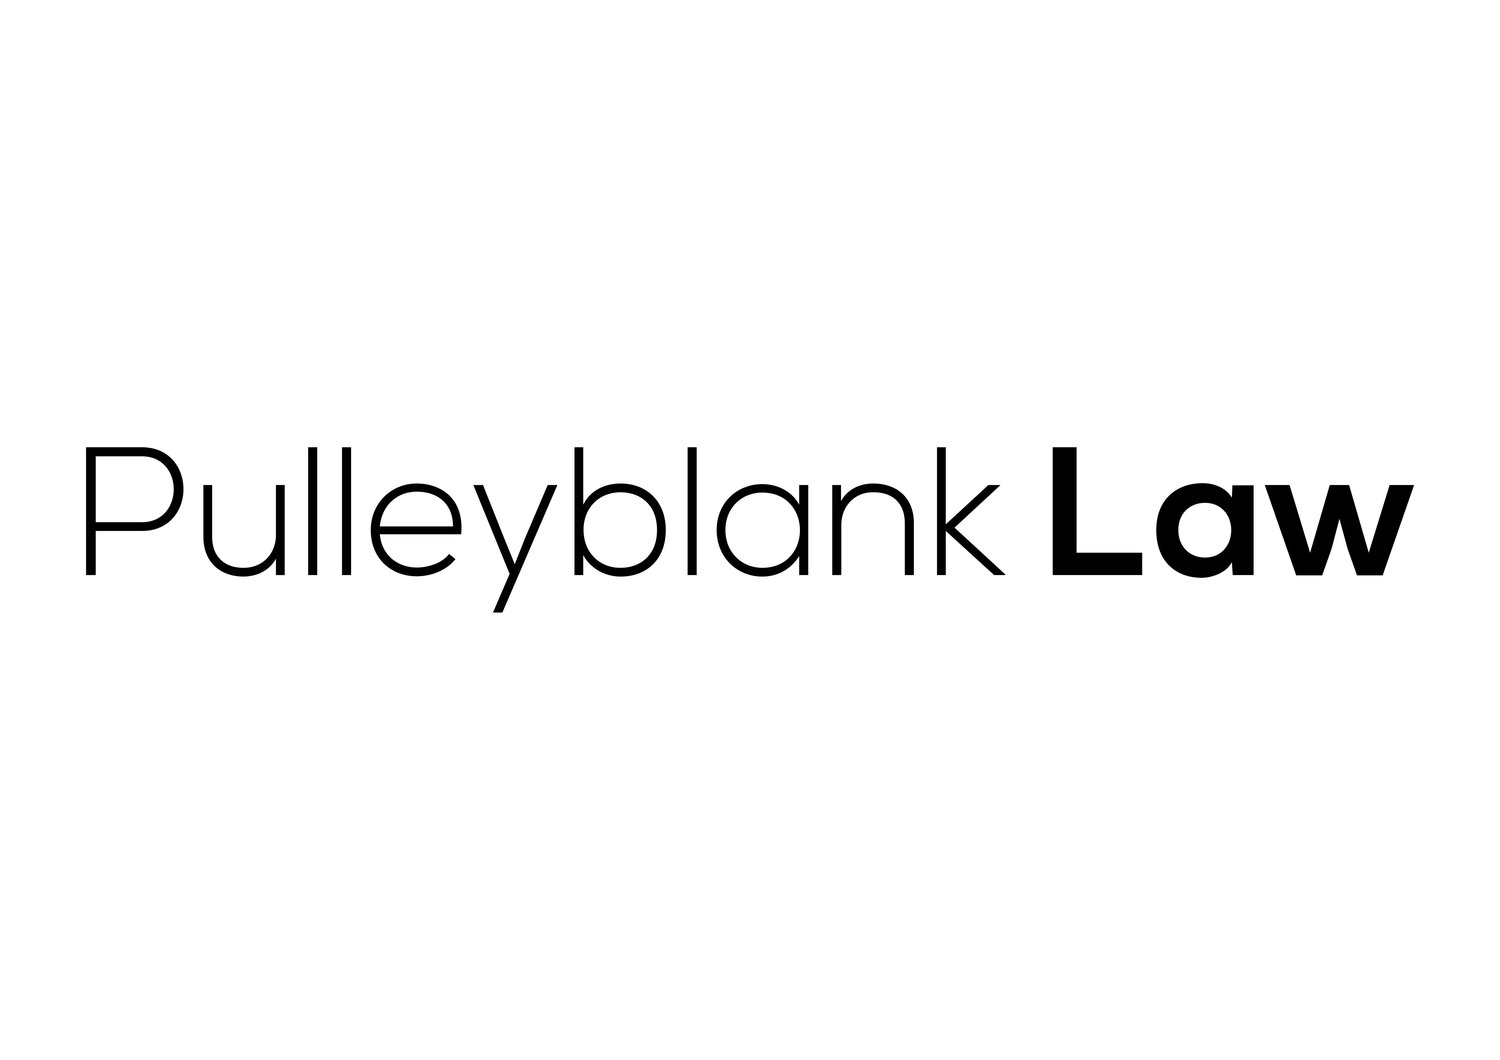 Pulleyblank Law